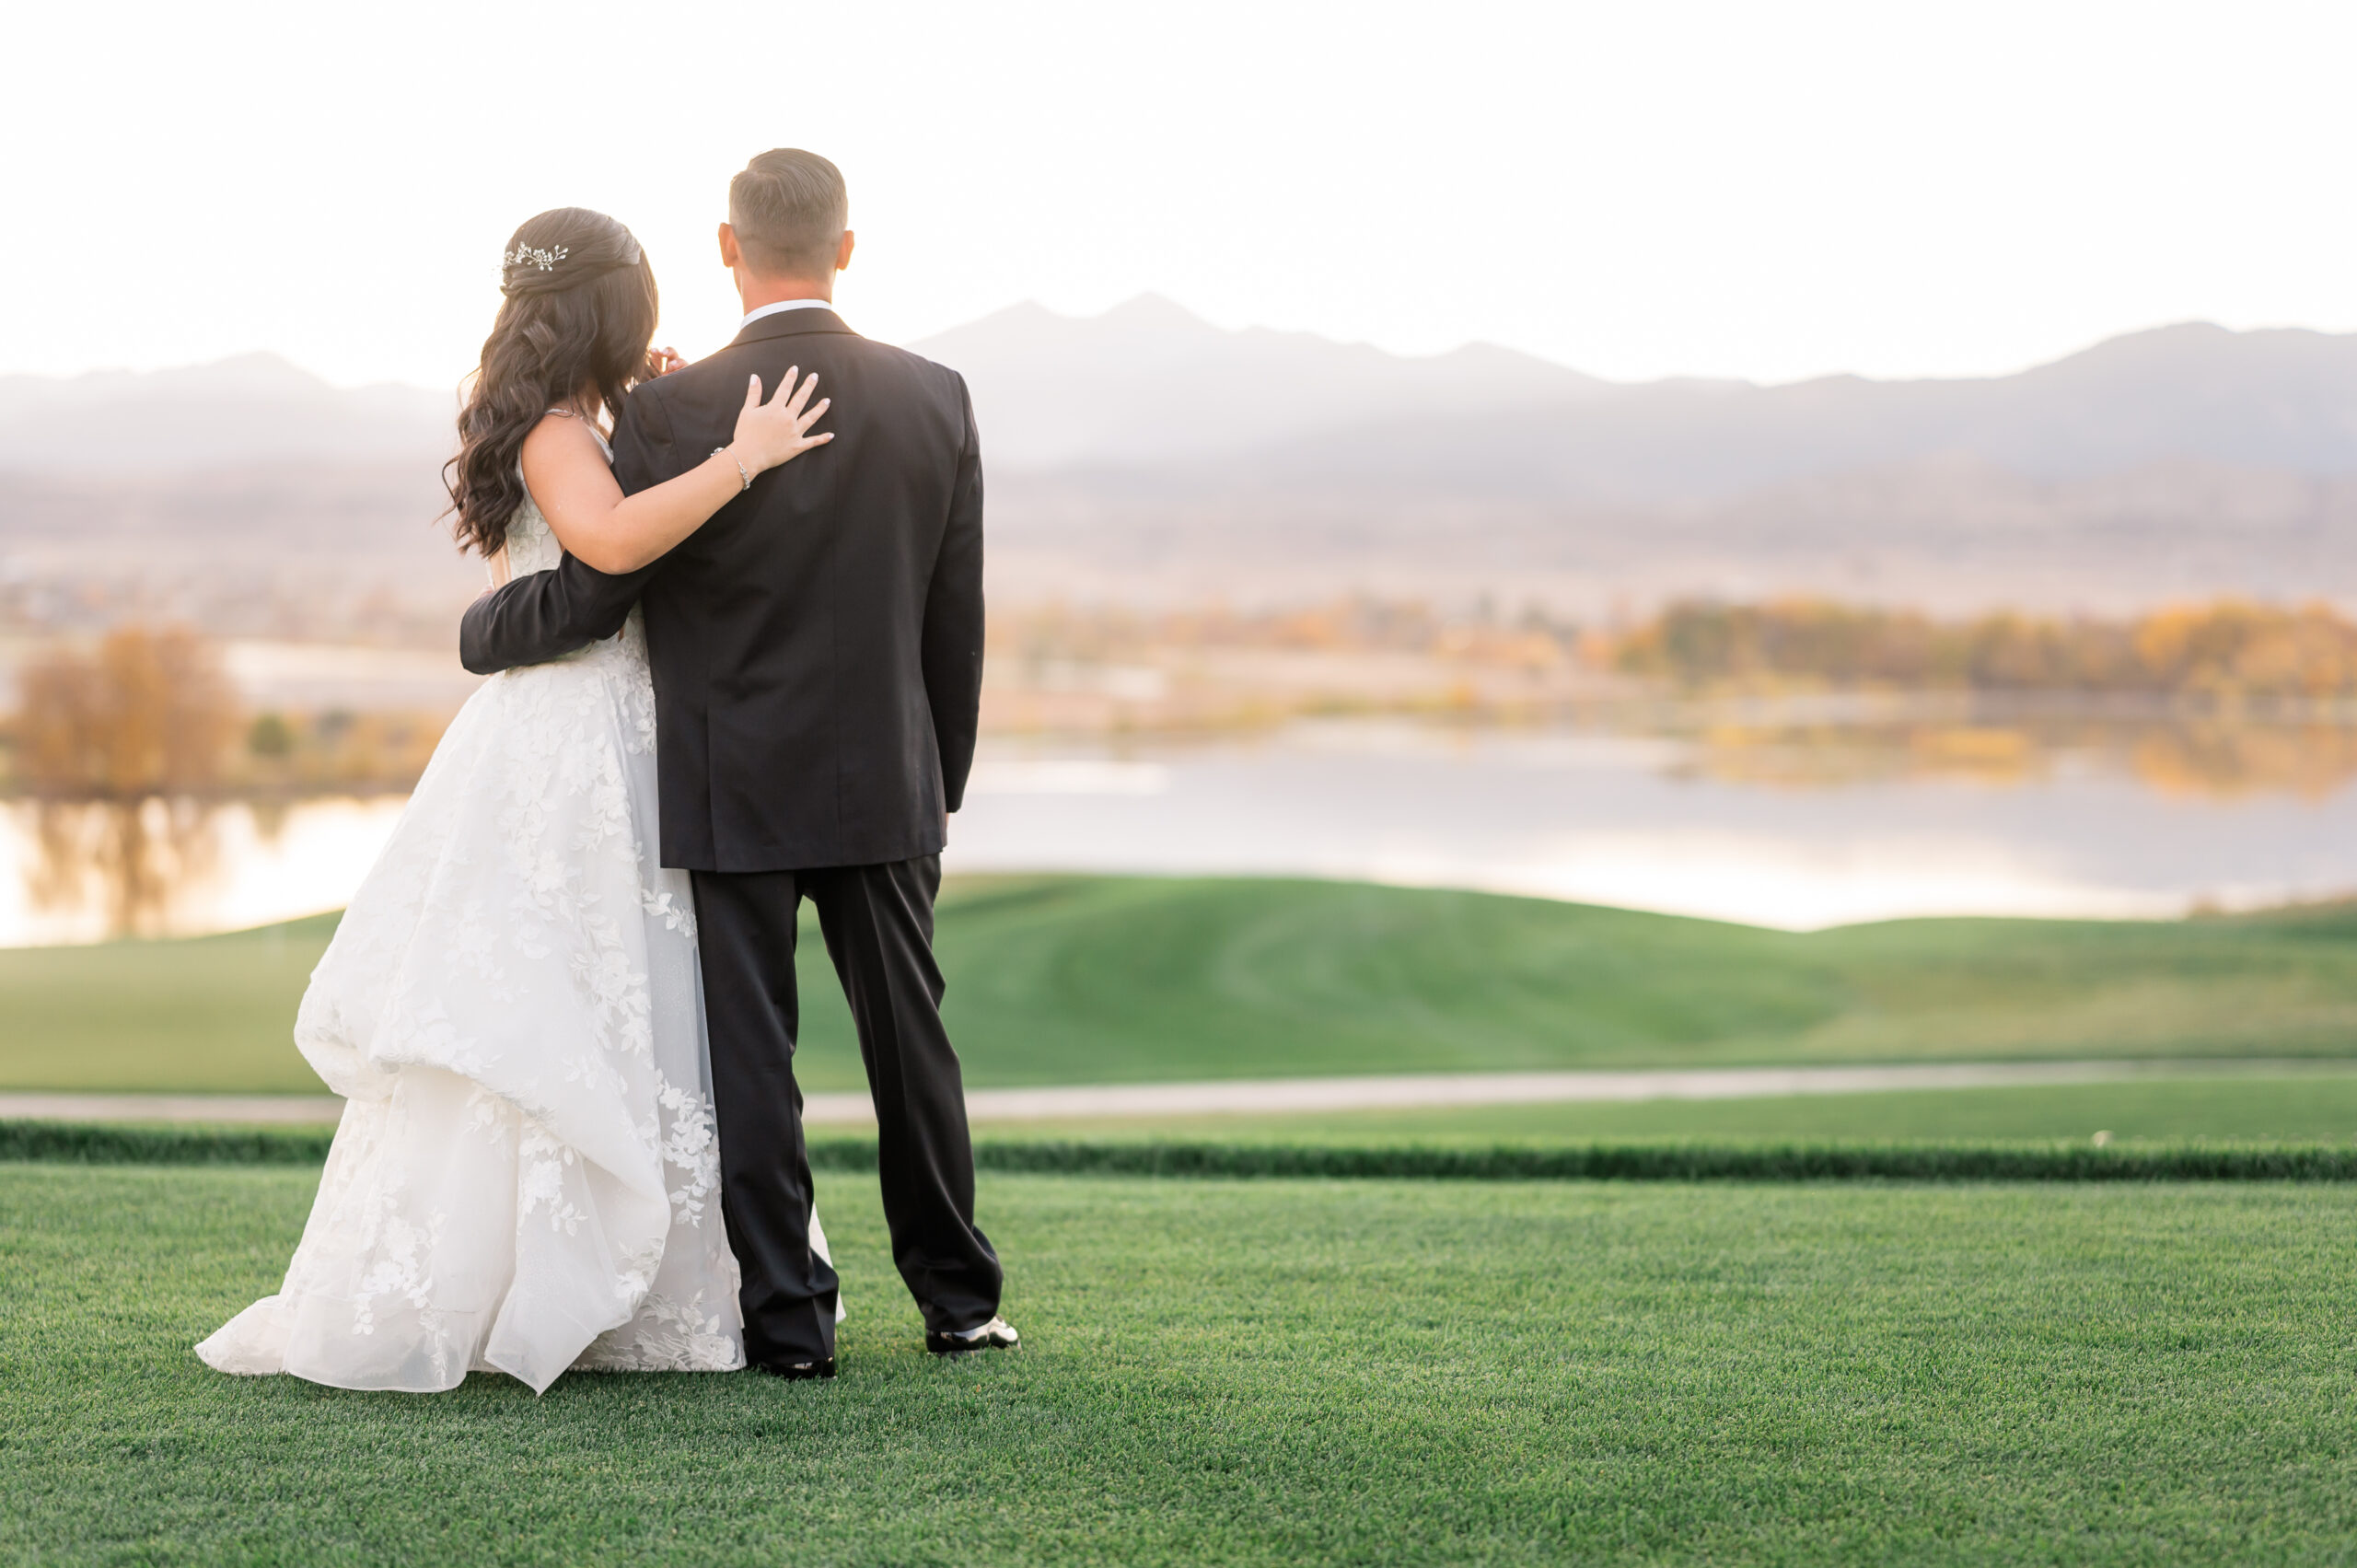 Amy + Kelsey TPC Golf Course Wedding in Berthoud Colorado - Britni Girard Photography - Colorado Destination Wedding Photographer and Videographer